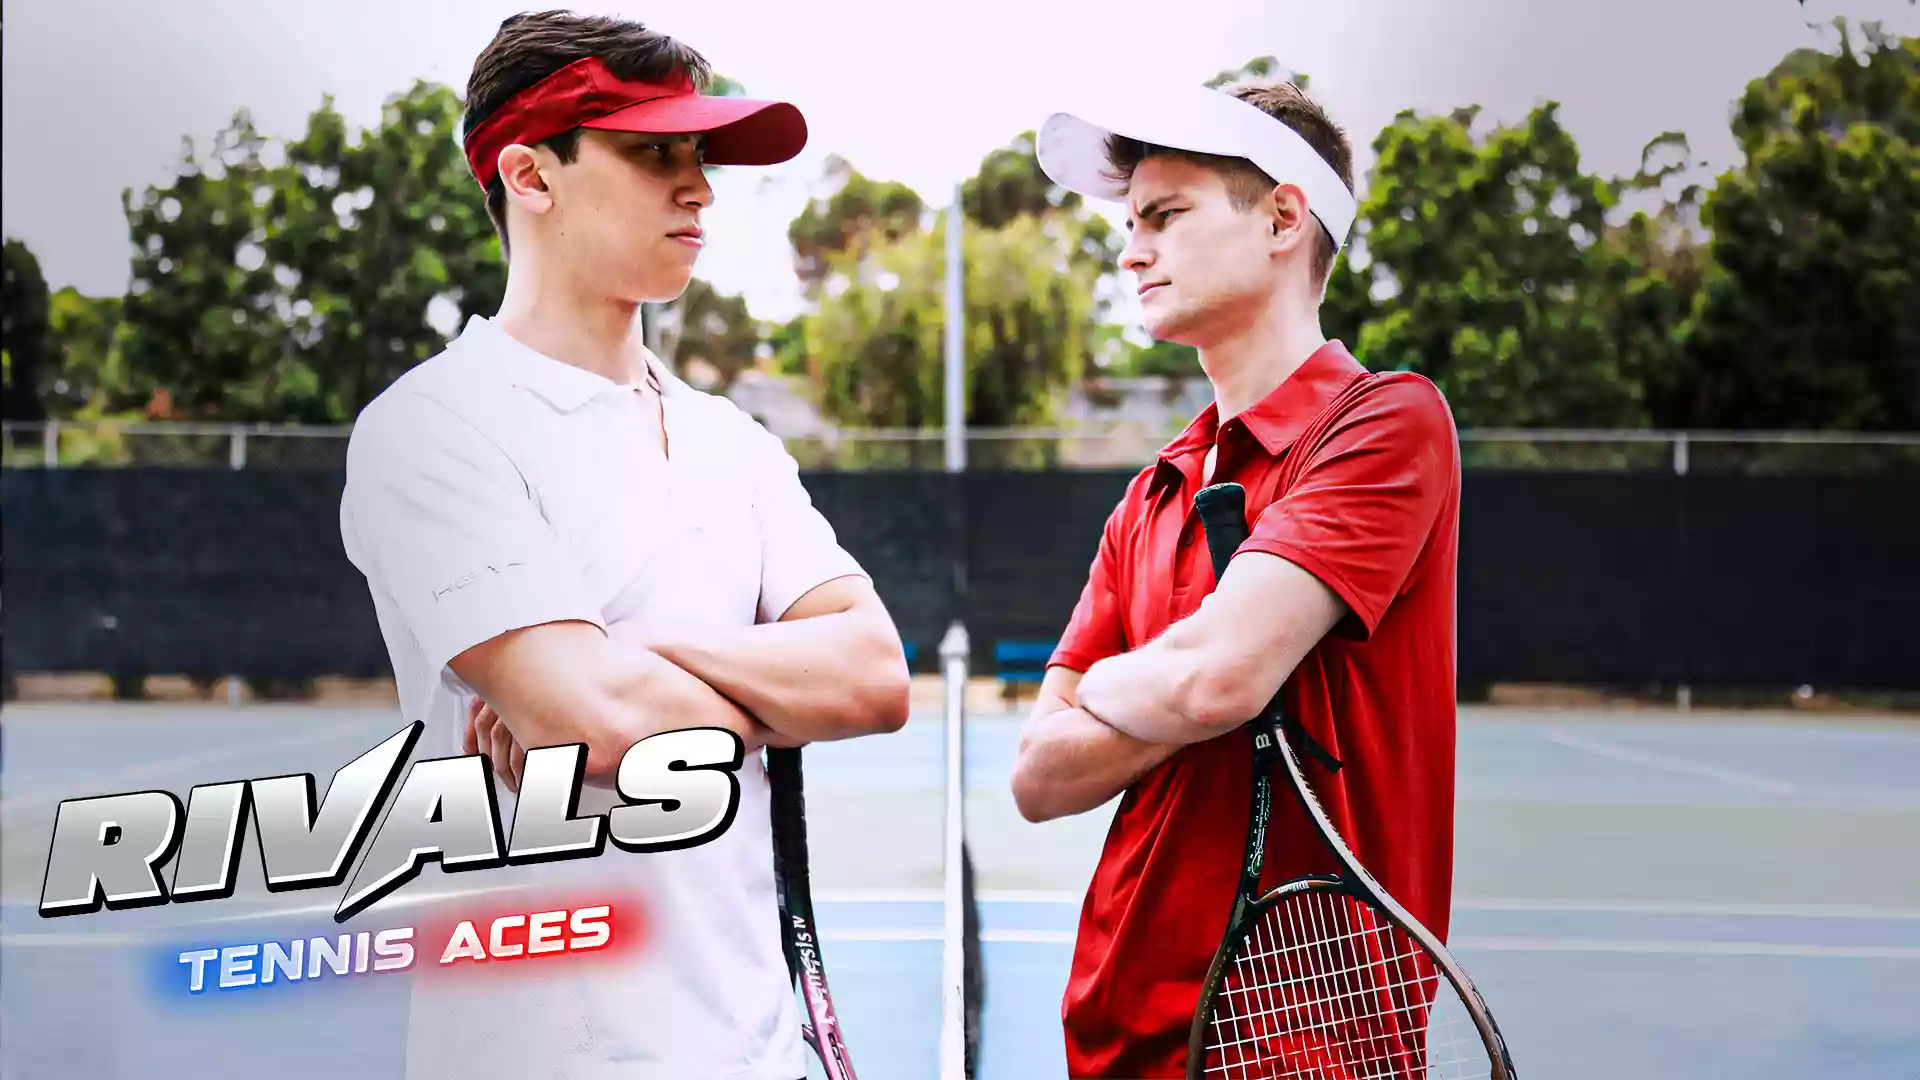 Rivals, Tennis Aces – Trevor Harris and Cameron Neuton